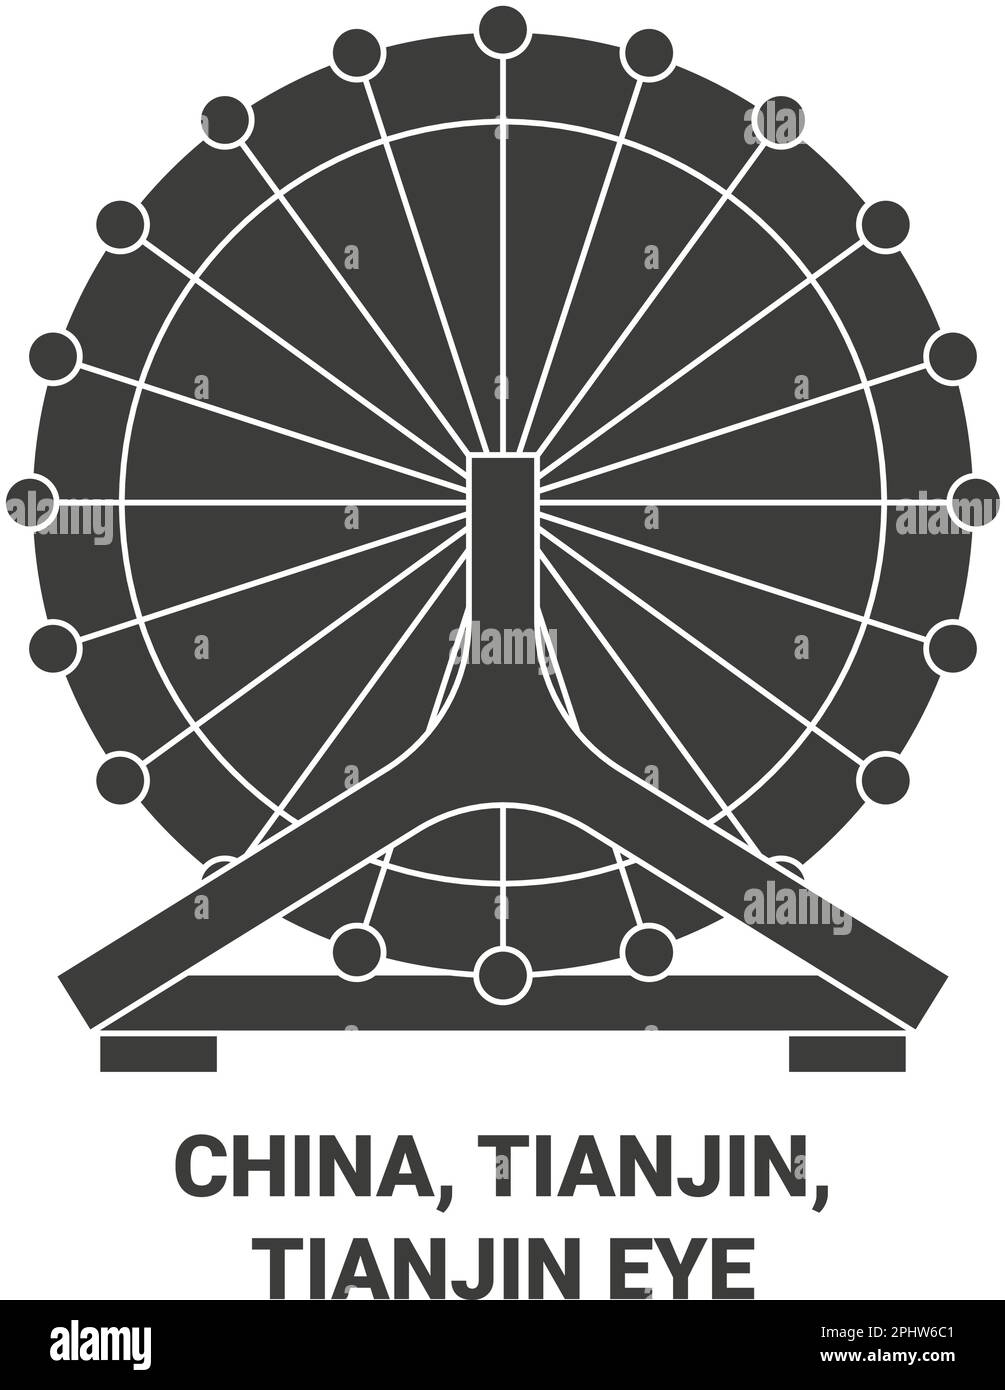 China, Tianjin, Tianjin Eye travel landmark vector illustration Stock Vector